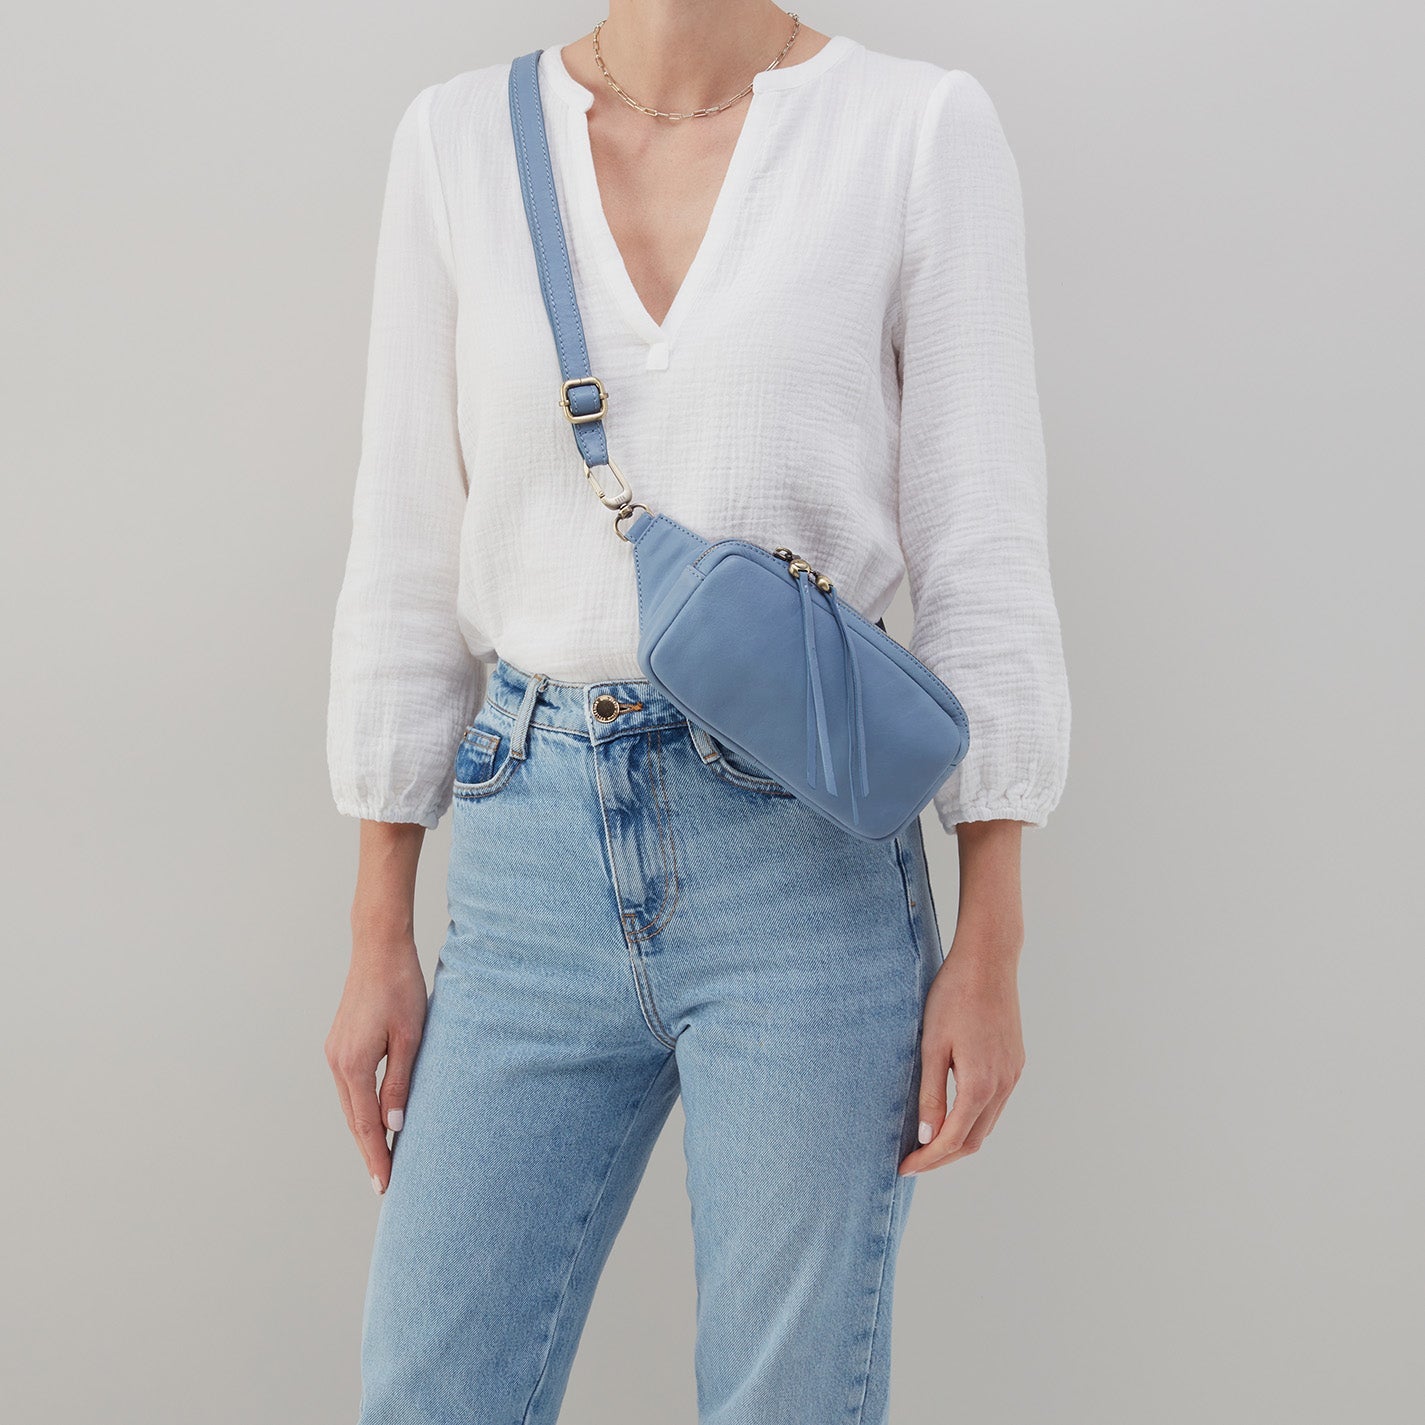 person wearing jeans and white blouse with provence blue shaker belt bag shaker belt bag over her shoulder.